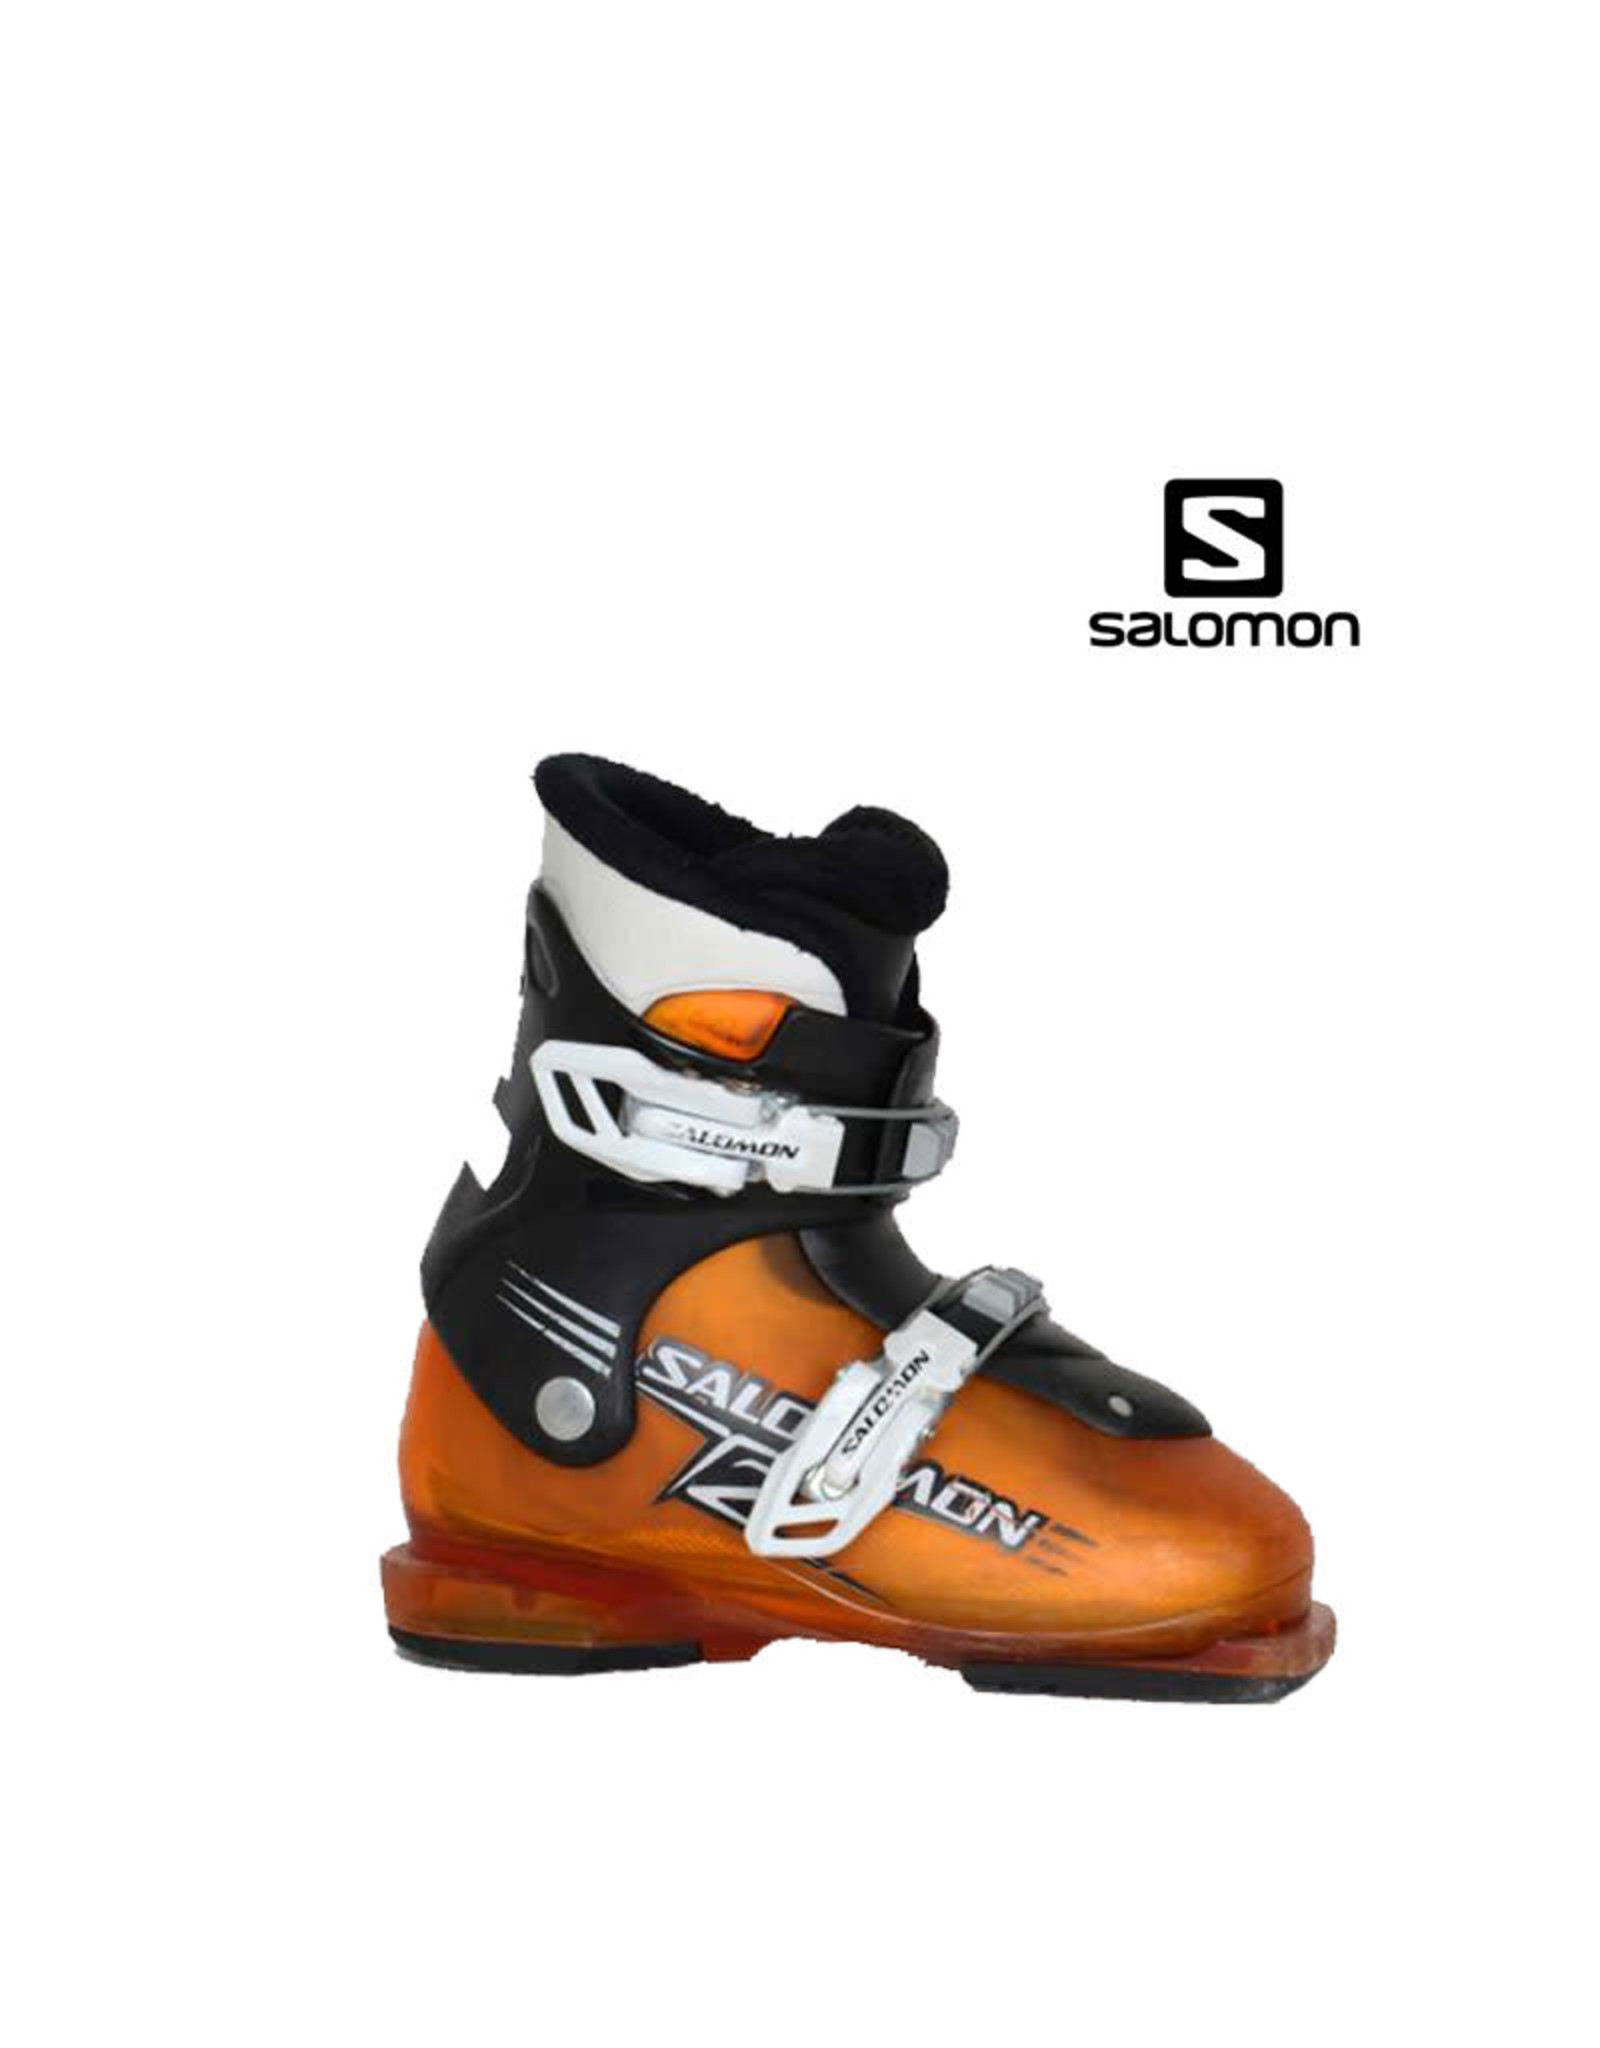 SALOMON Skischoenen SALOMON T2 (Oranje) Gebruikt